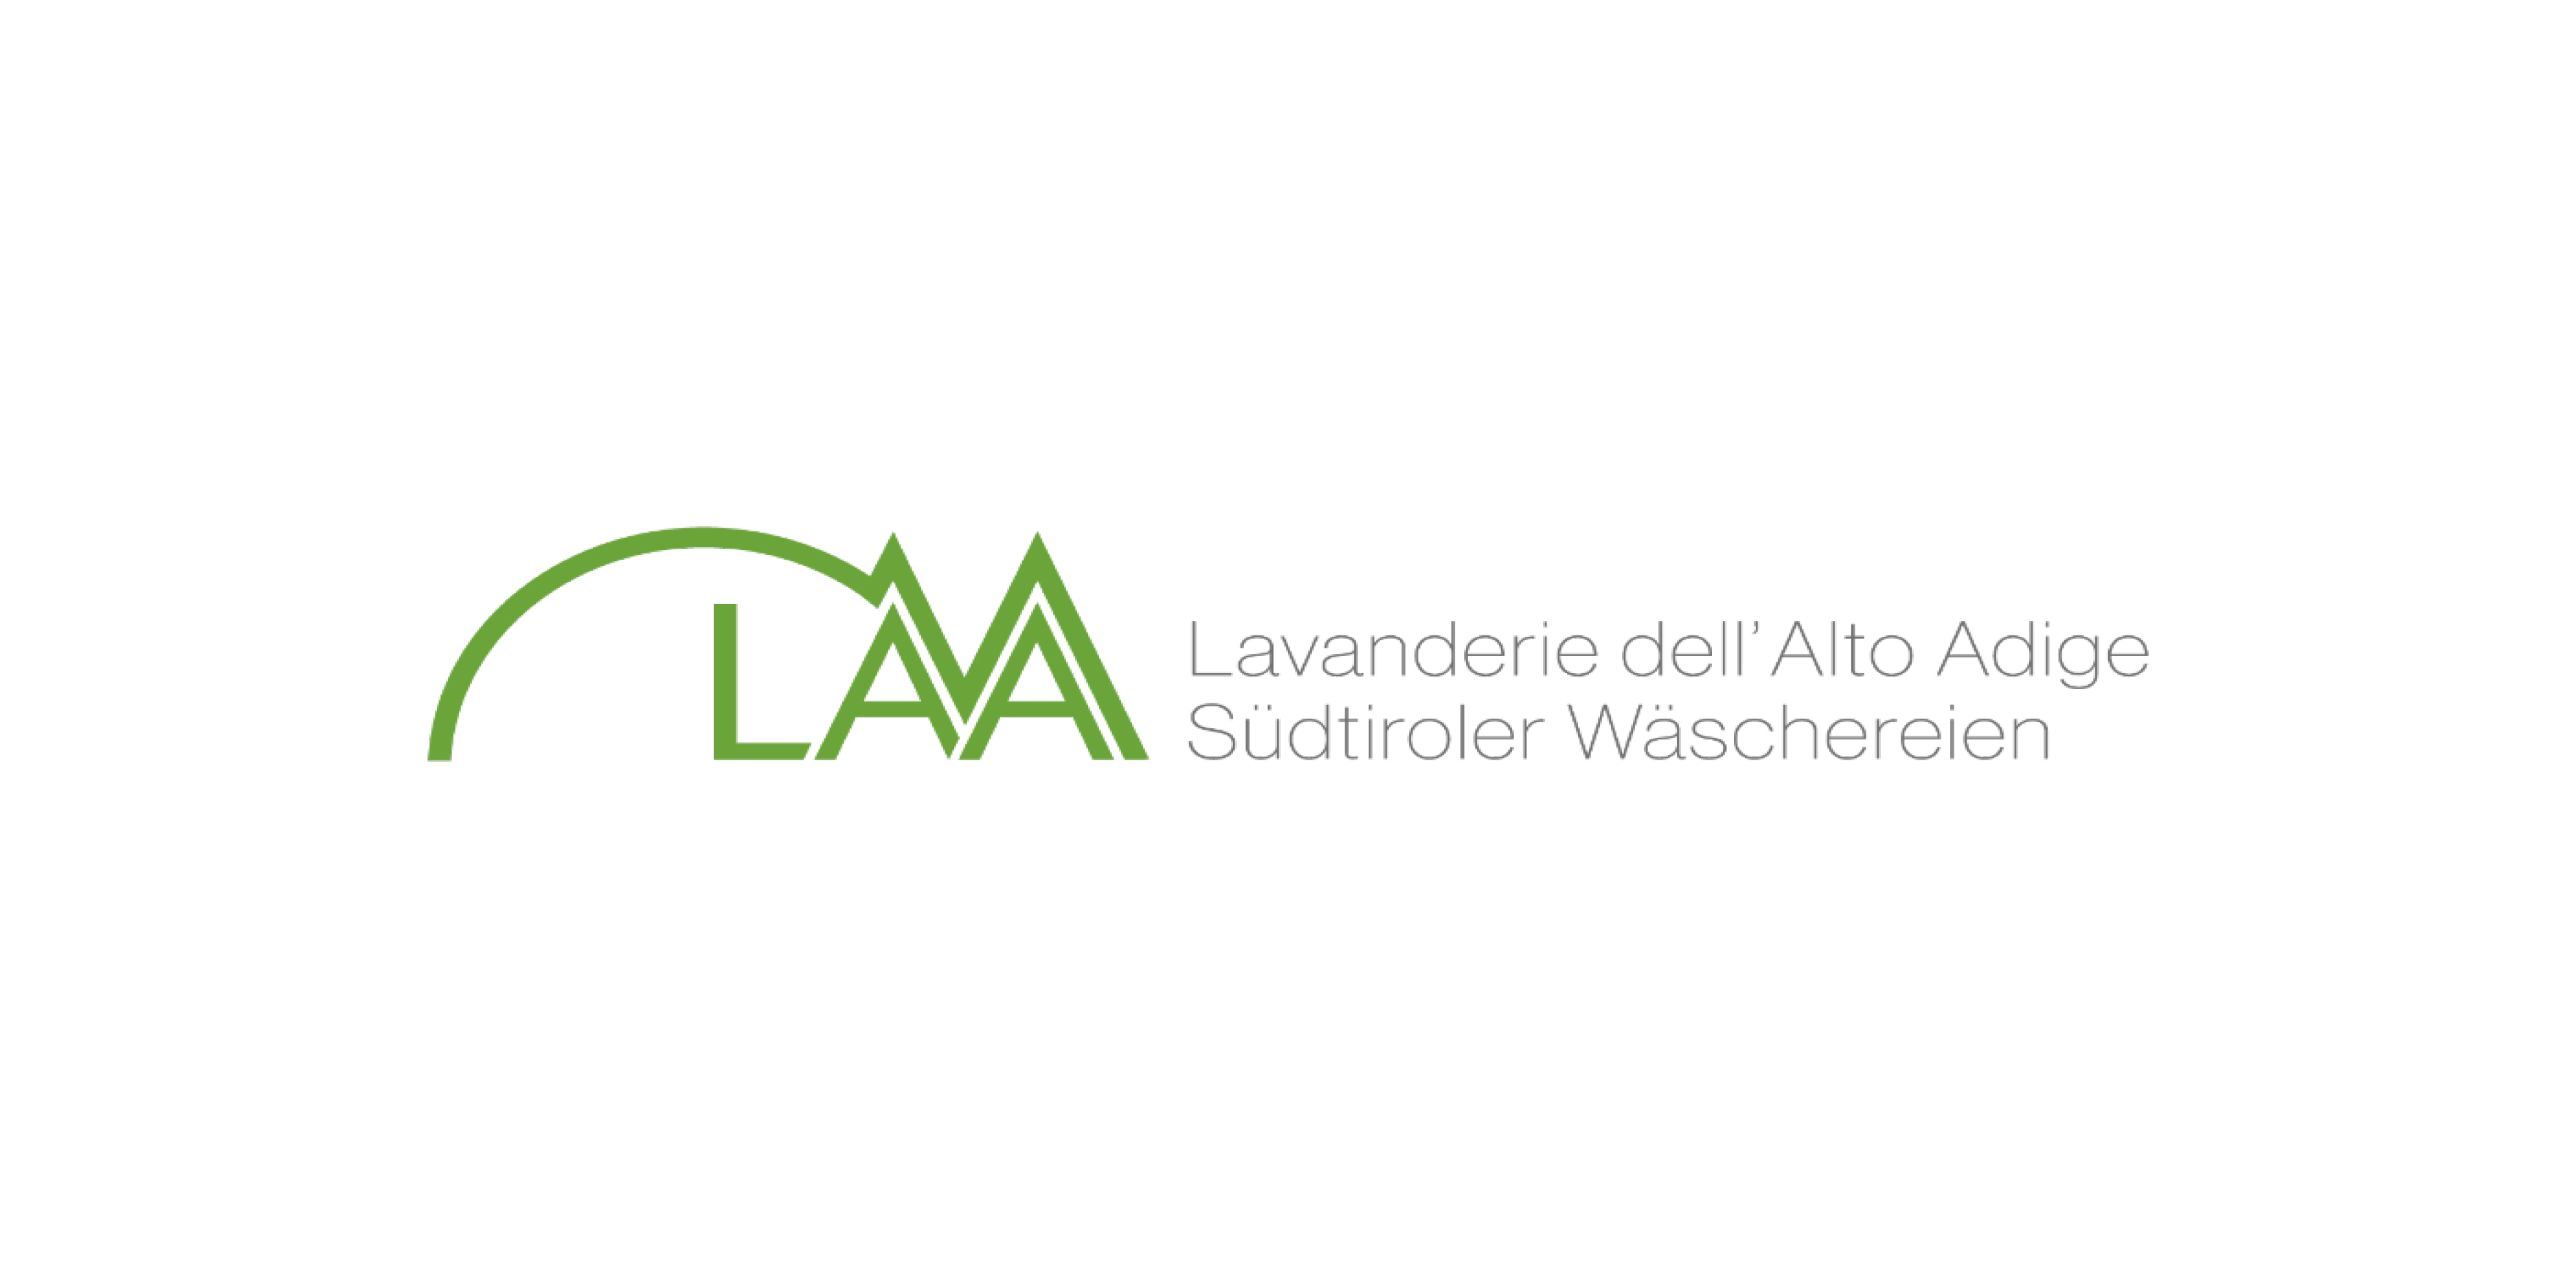 Lavanderie dell'Alto Adige srl